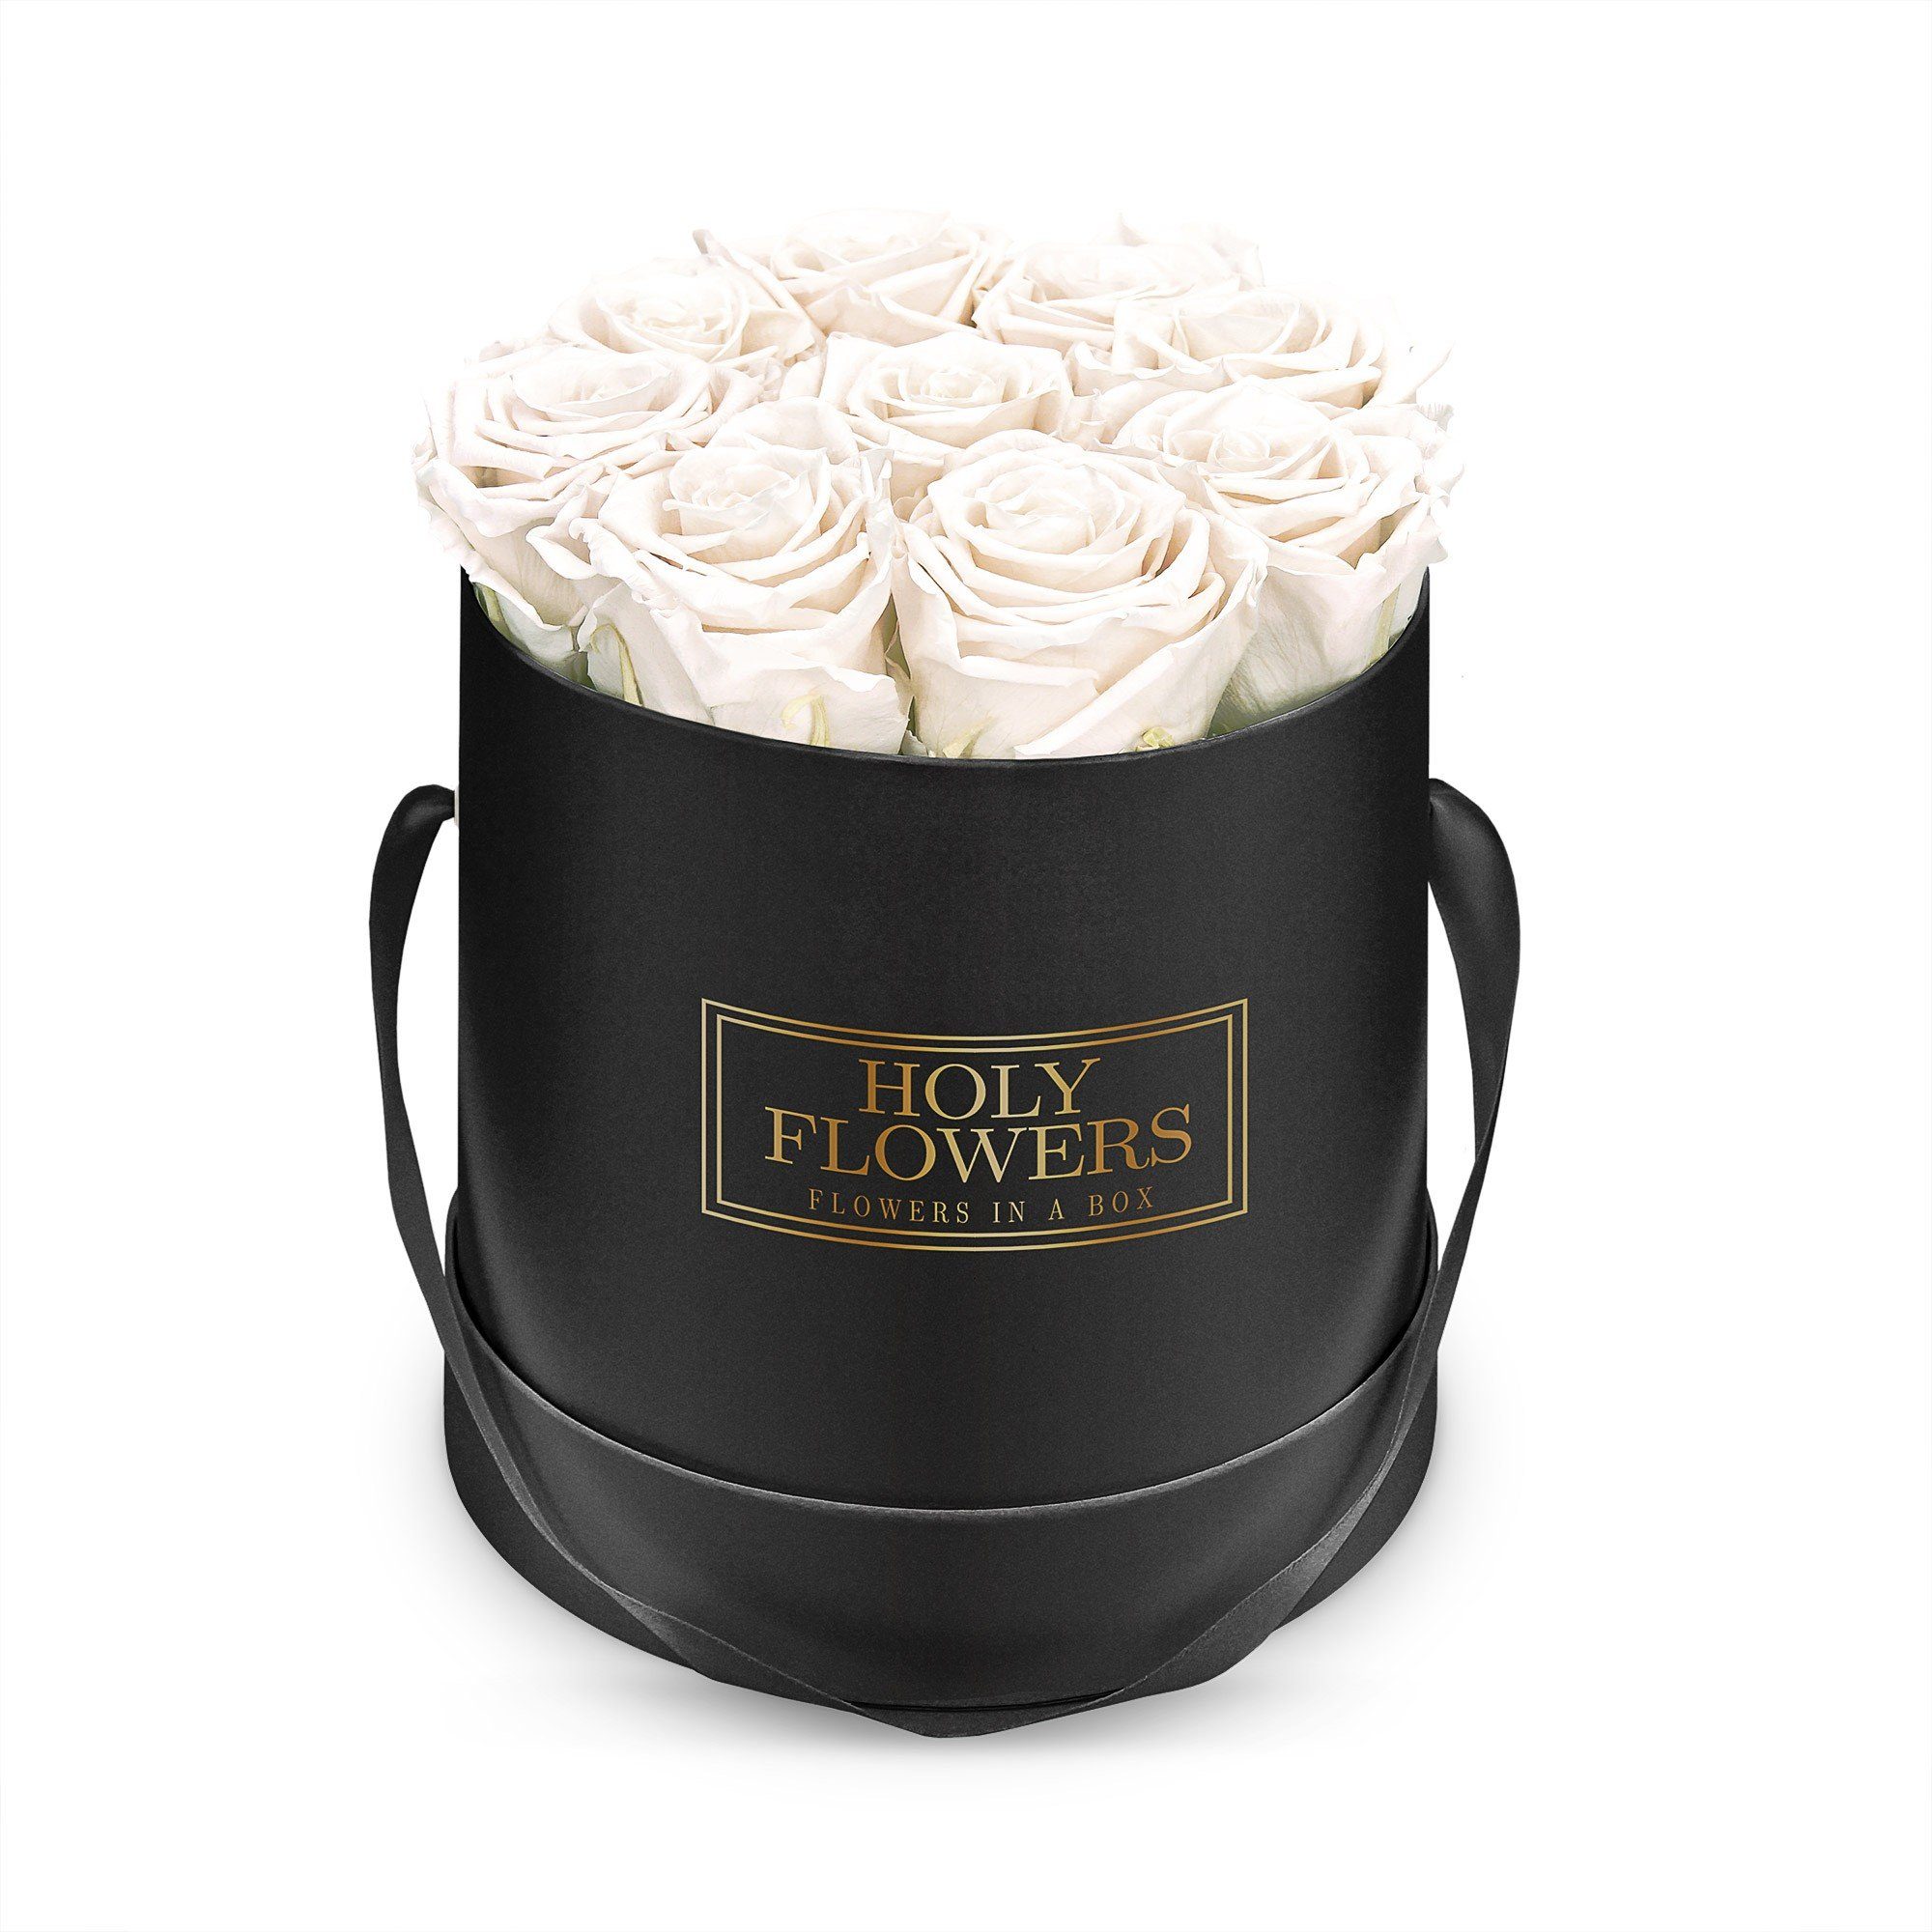 Kunstblume Runde Rosenbox in schwarz mit 8- 12 Infinity Rosen I 3 Jahre haltbar I Echte, duftende konservierte Blumen I by Raul Richter Infinity Rose, Holy Flowers, Höhe 14 cm Holy White